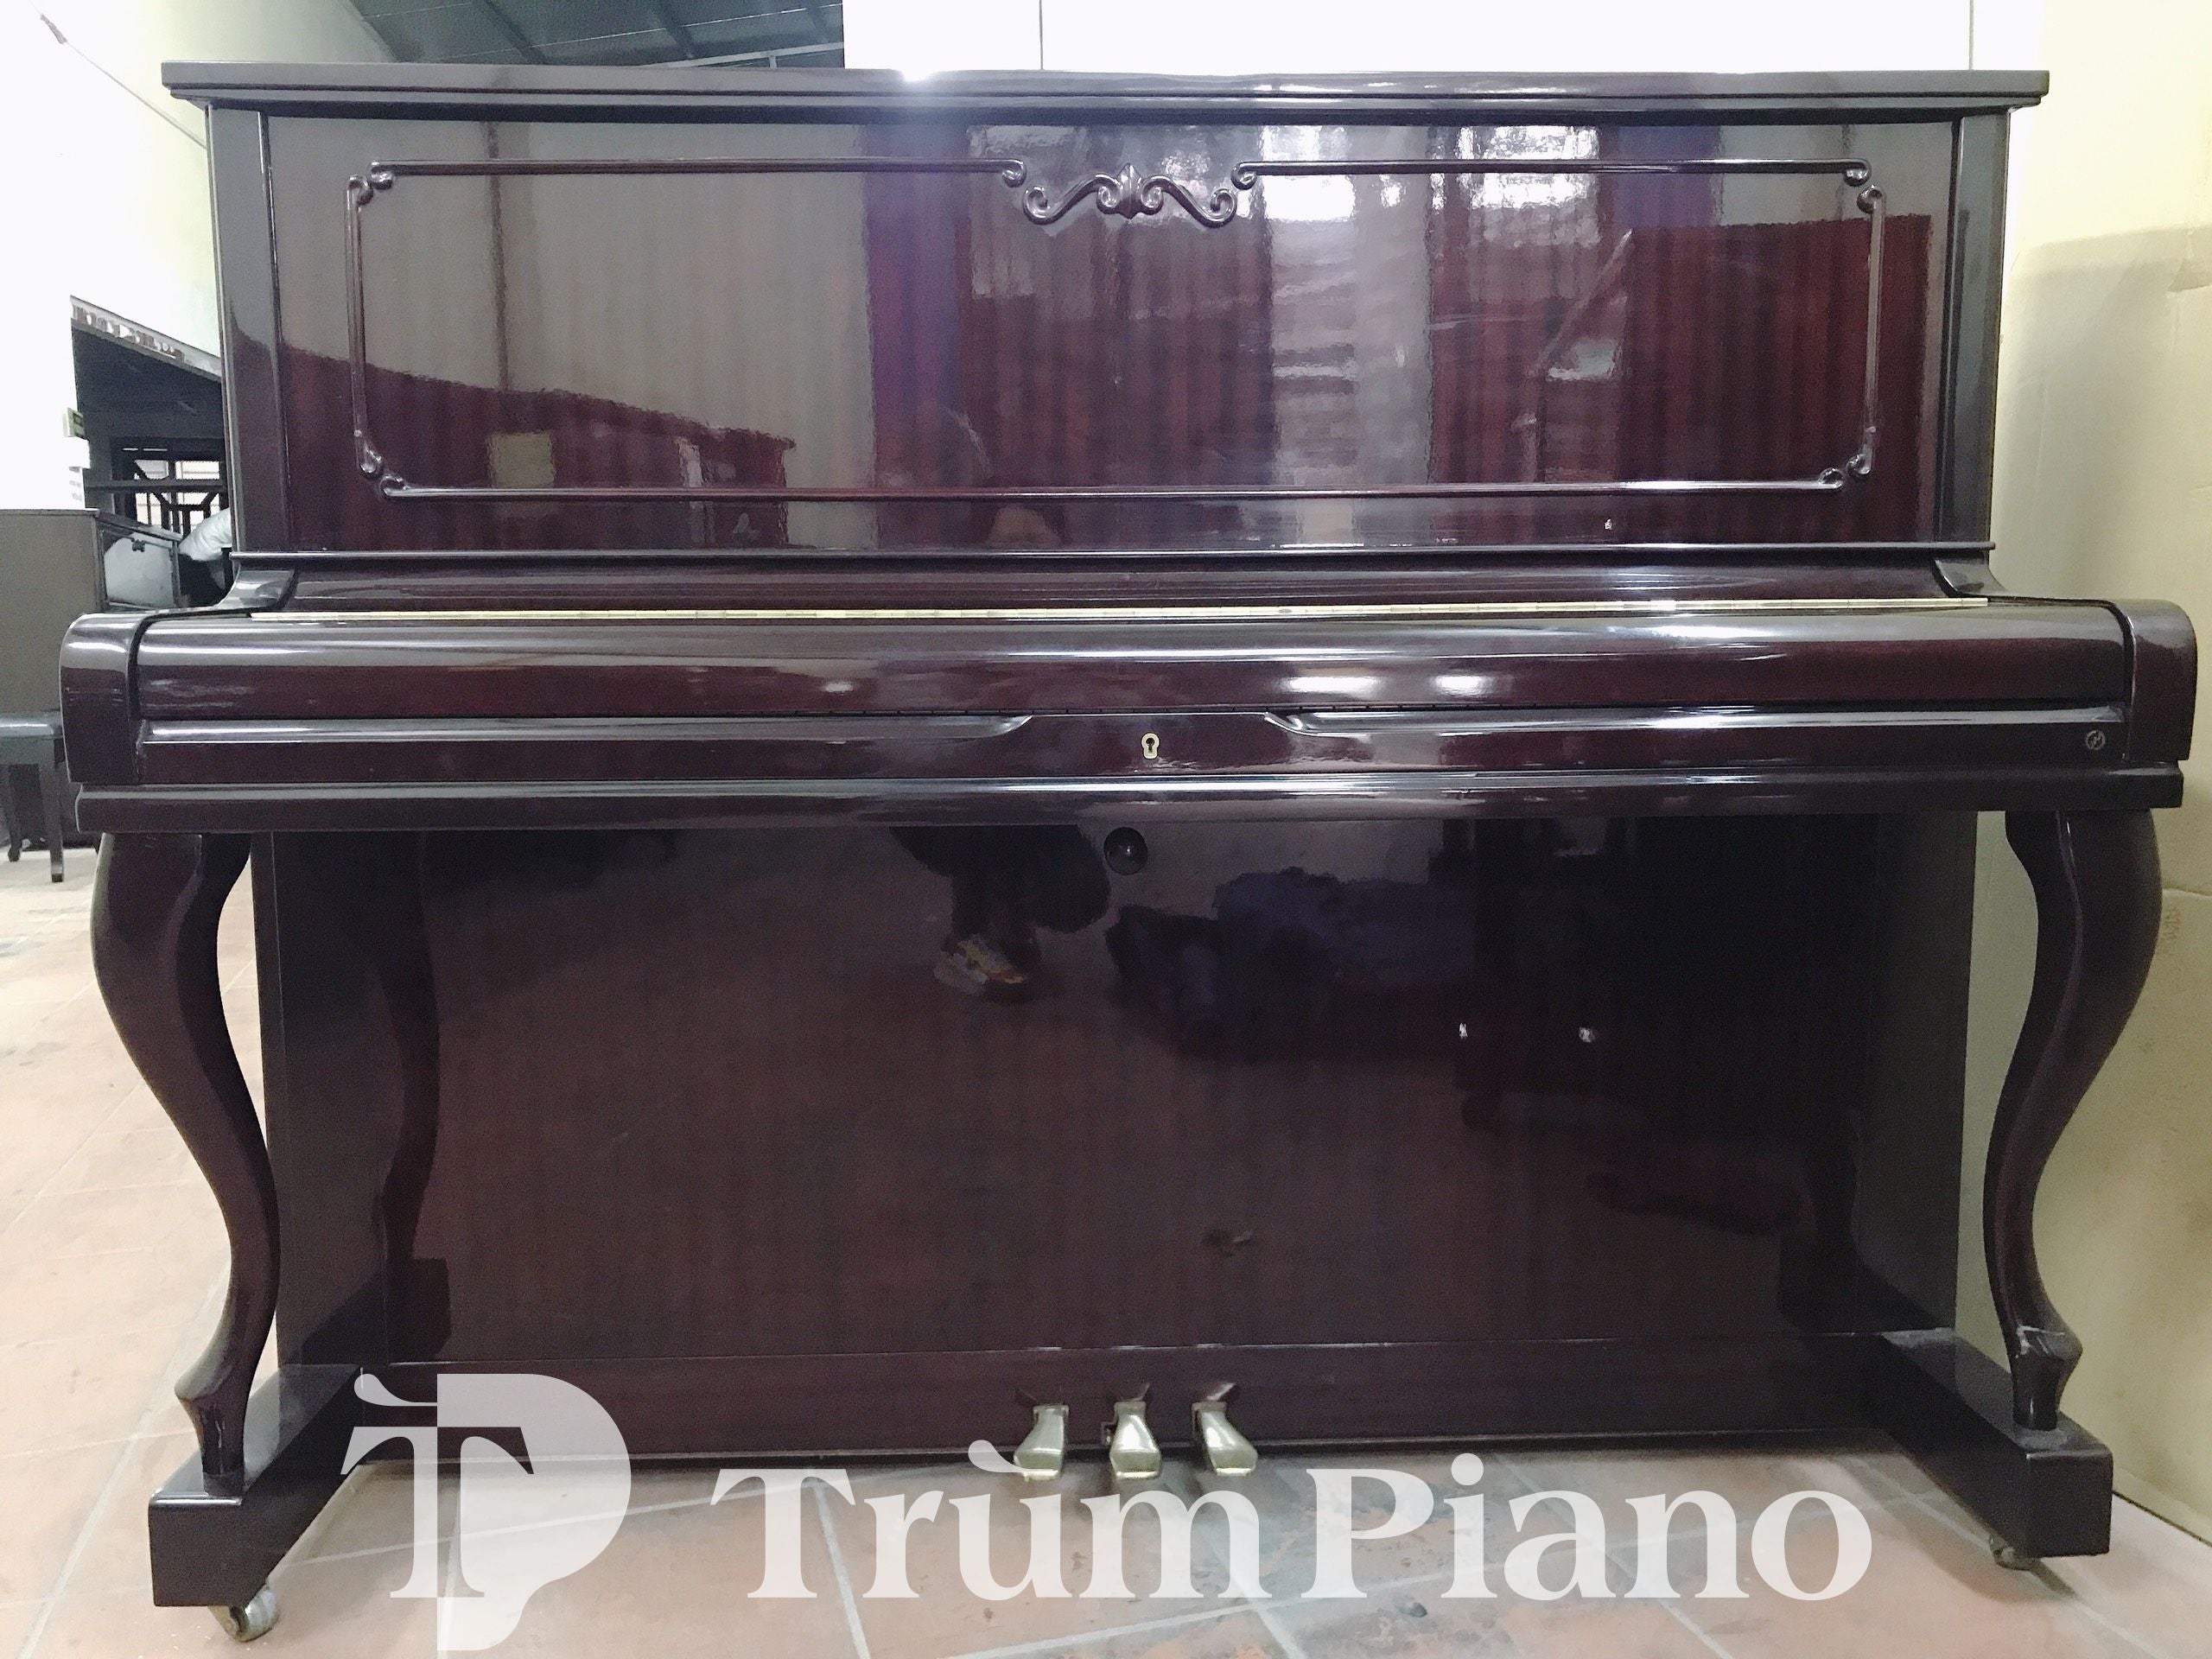 Đàn Piano ROSENSTOCK R202